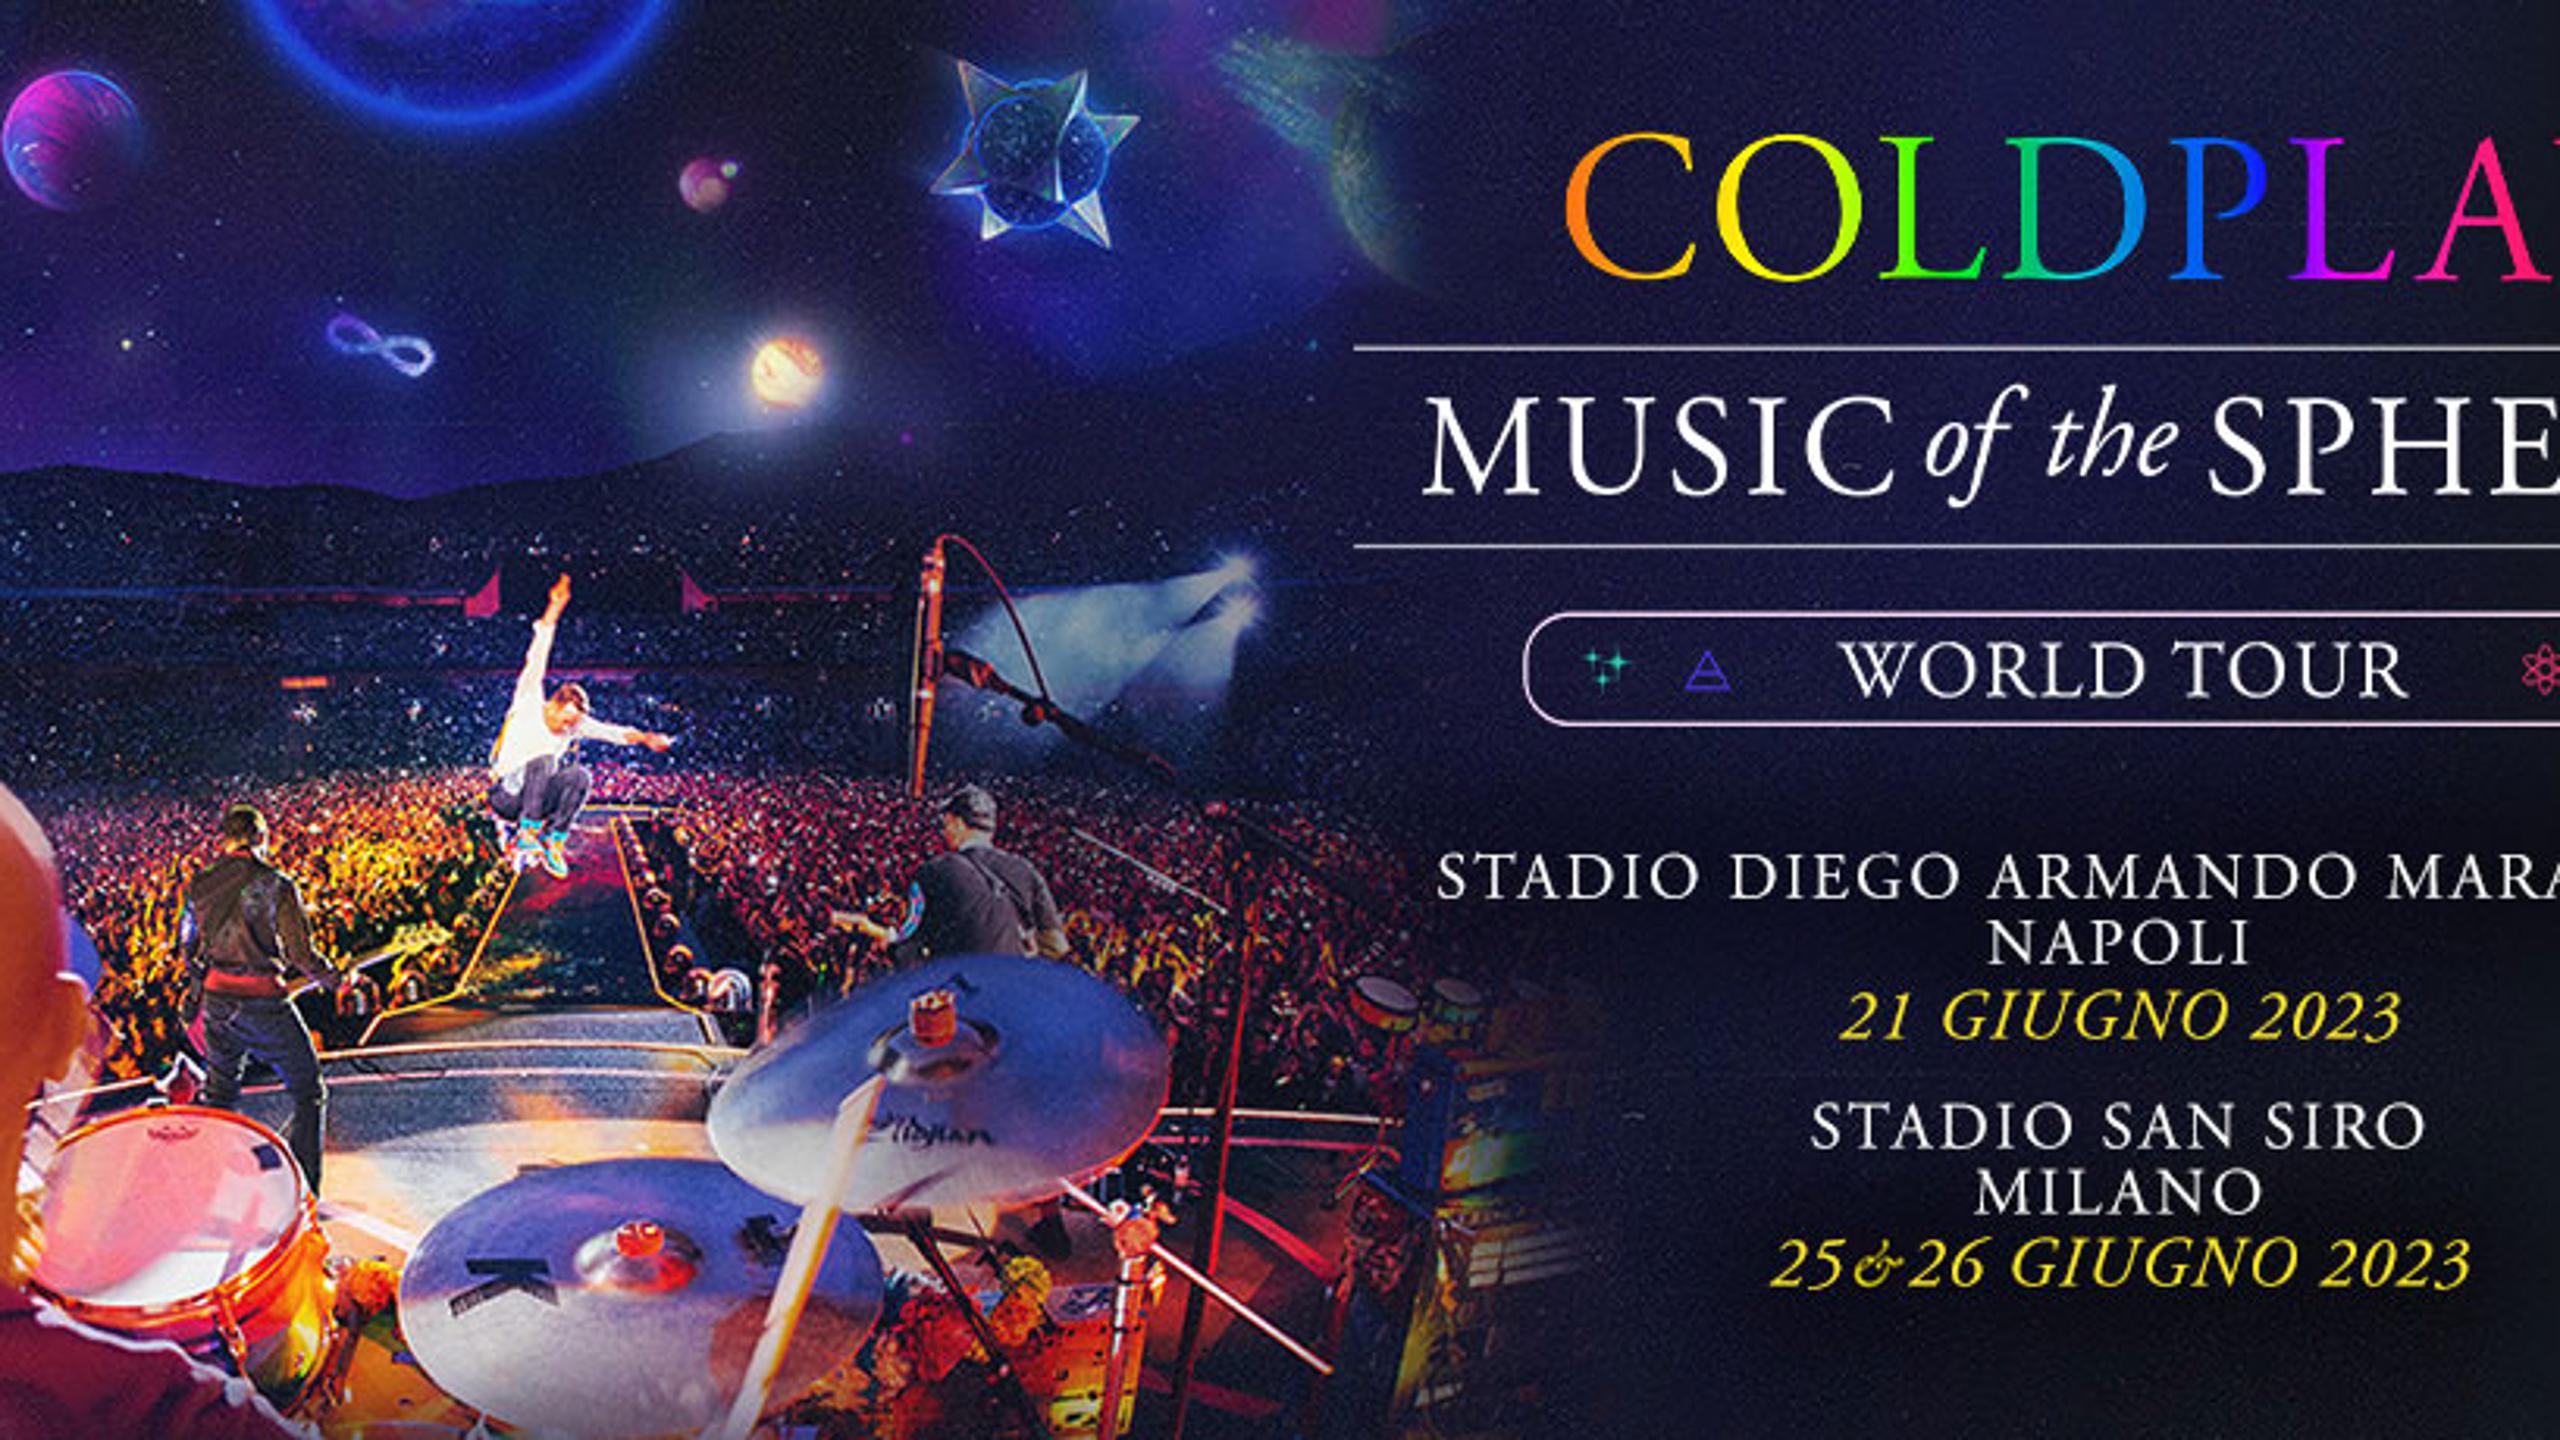 Coldplay concert tickets for Stadio Diego Armando Maradona, Naples